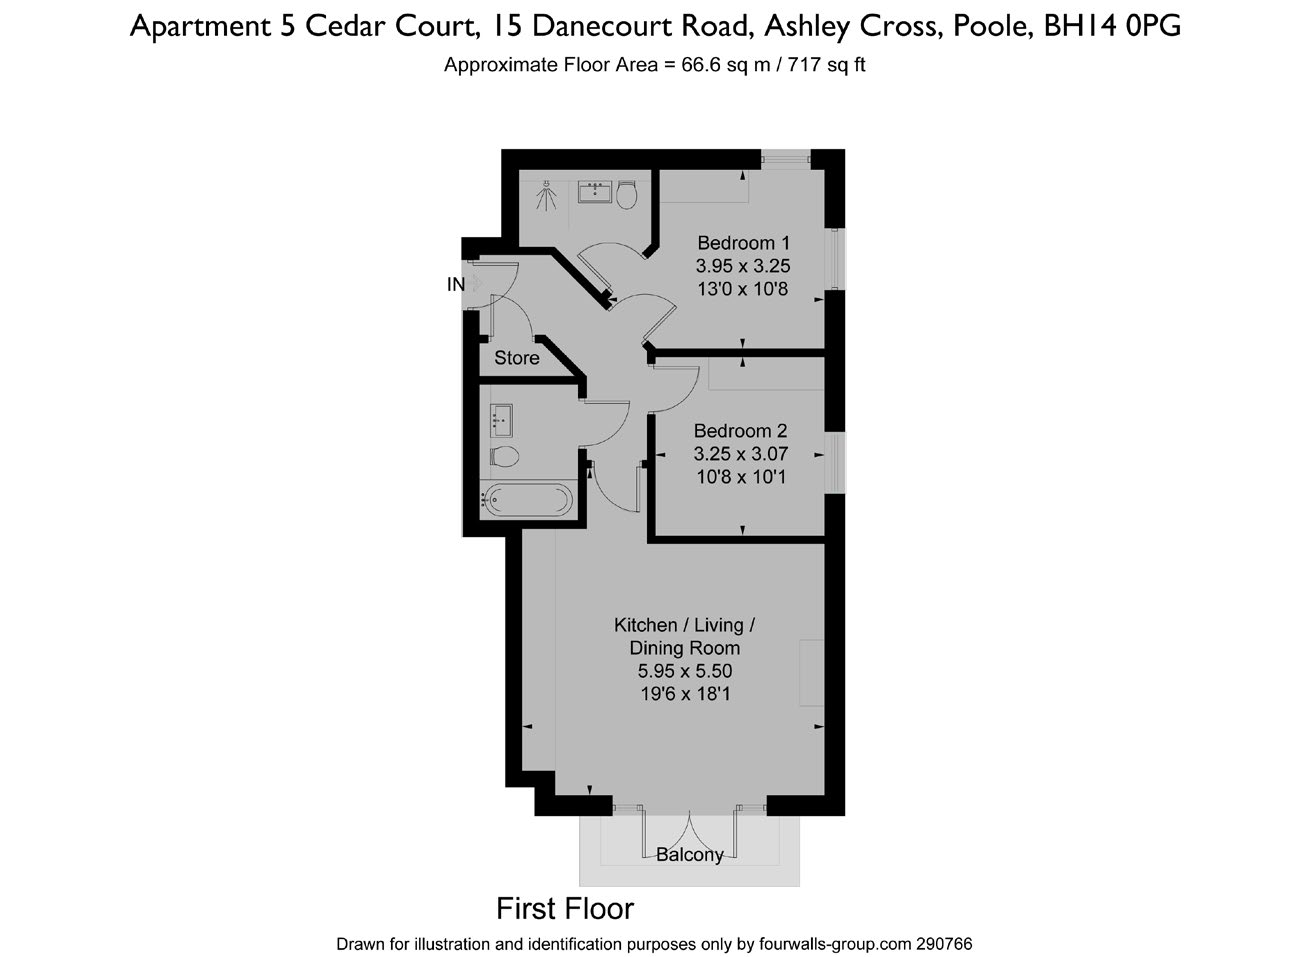 Apartment 5 Cedar Court floor plan